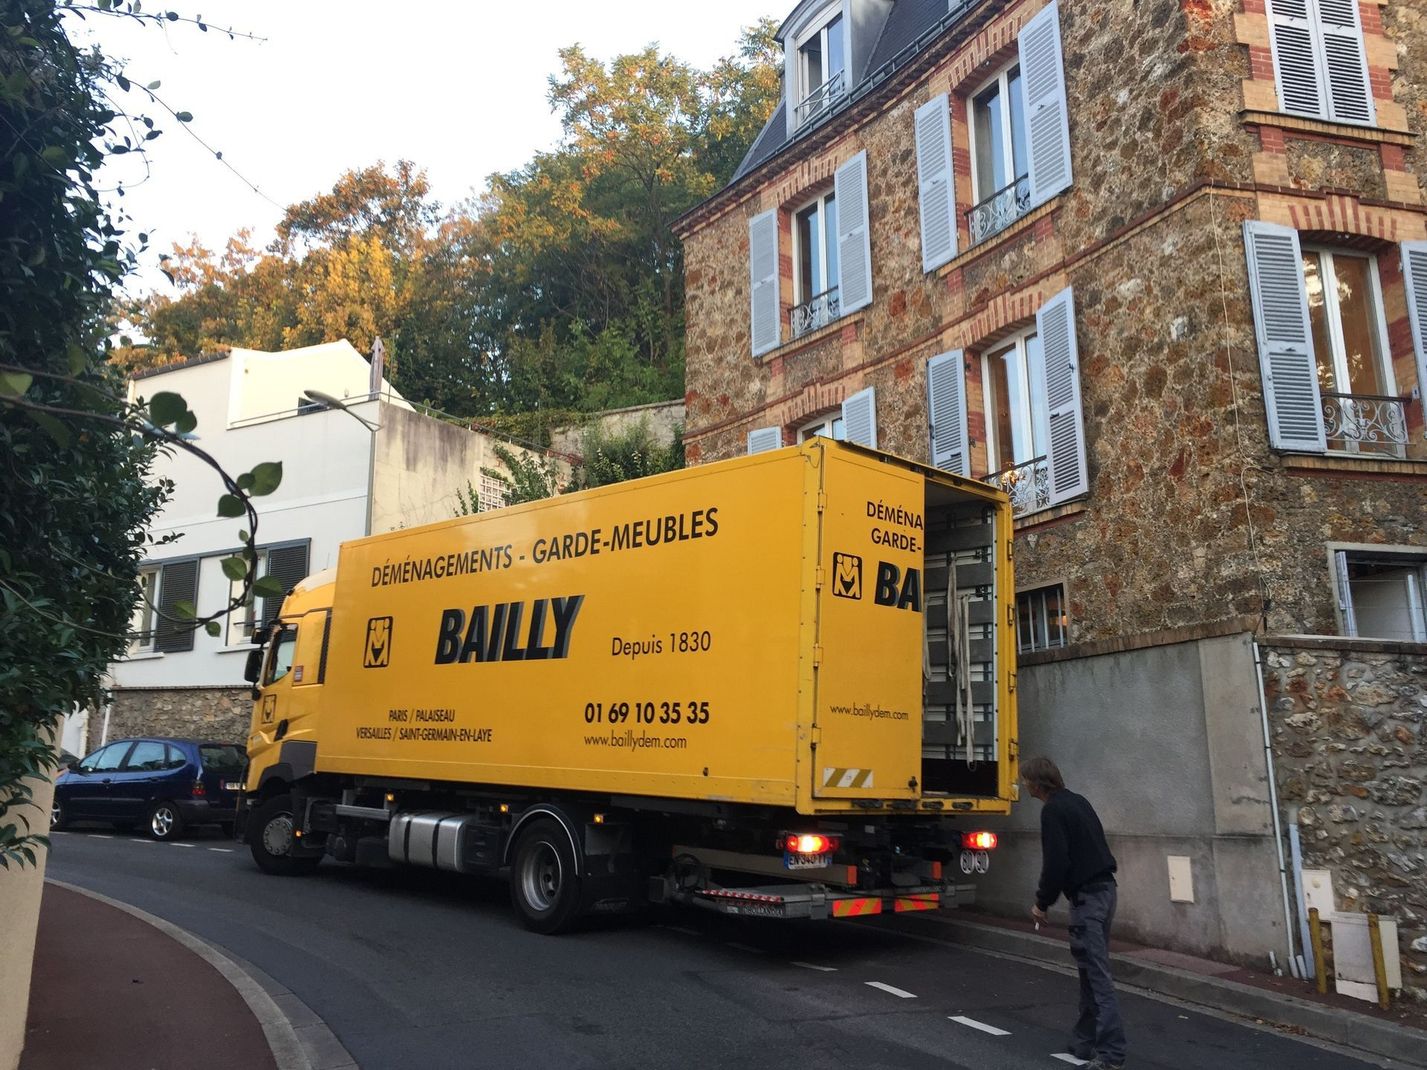 Nos camions de déménagement jaunes